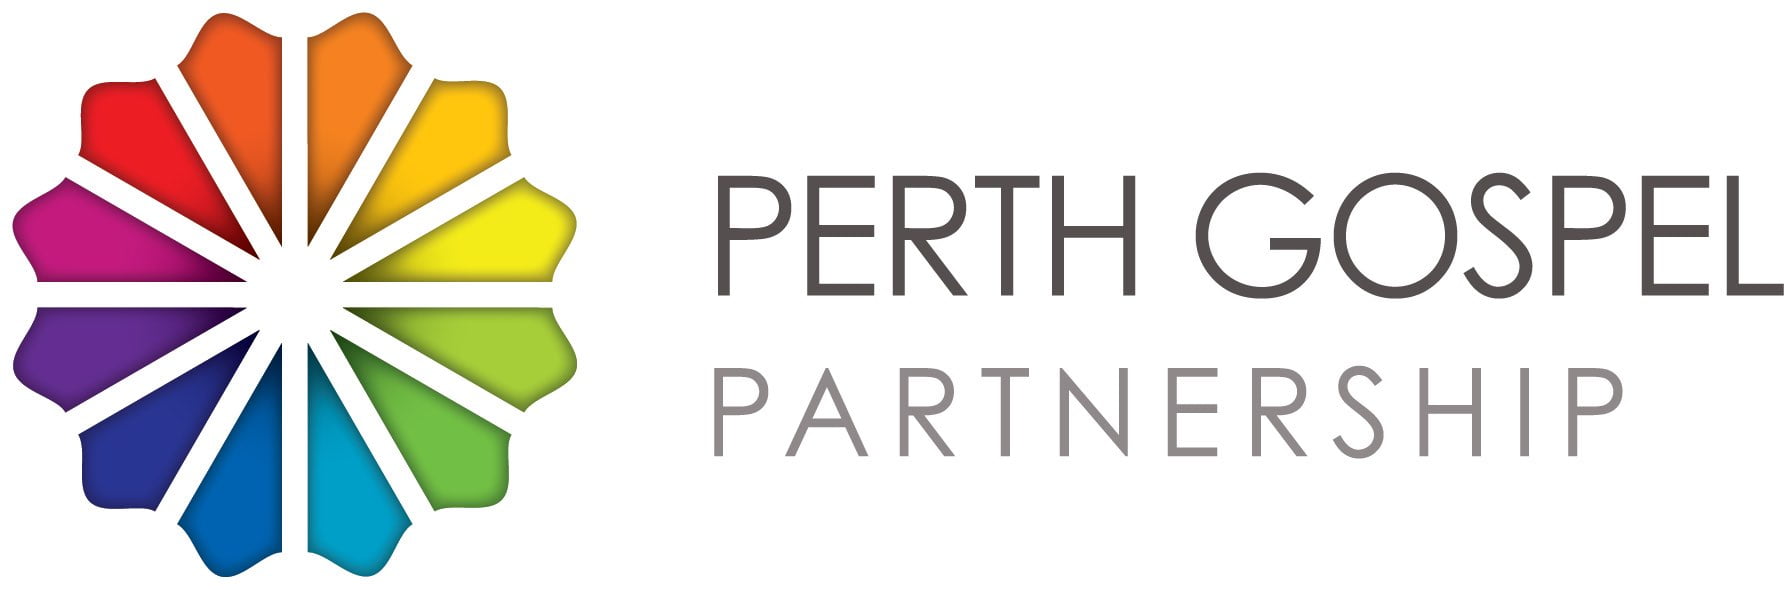 Perth Gospel Partnership